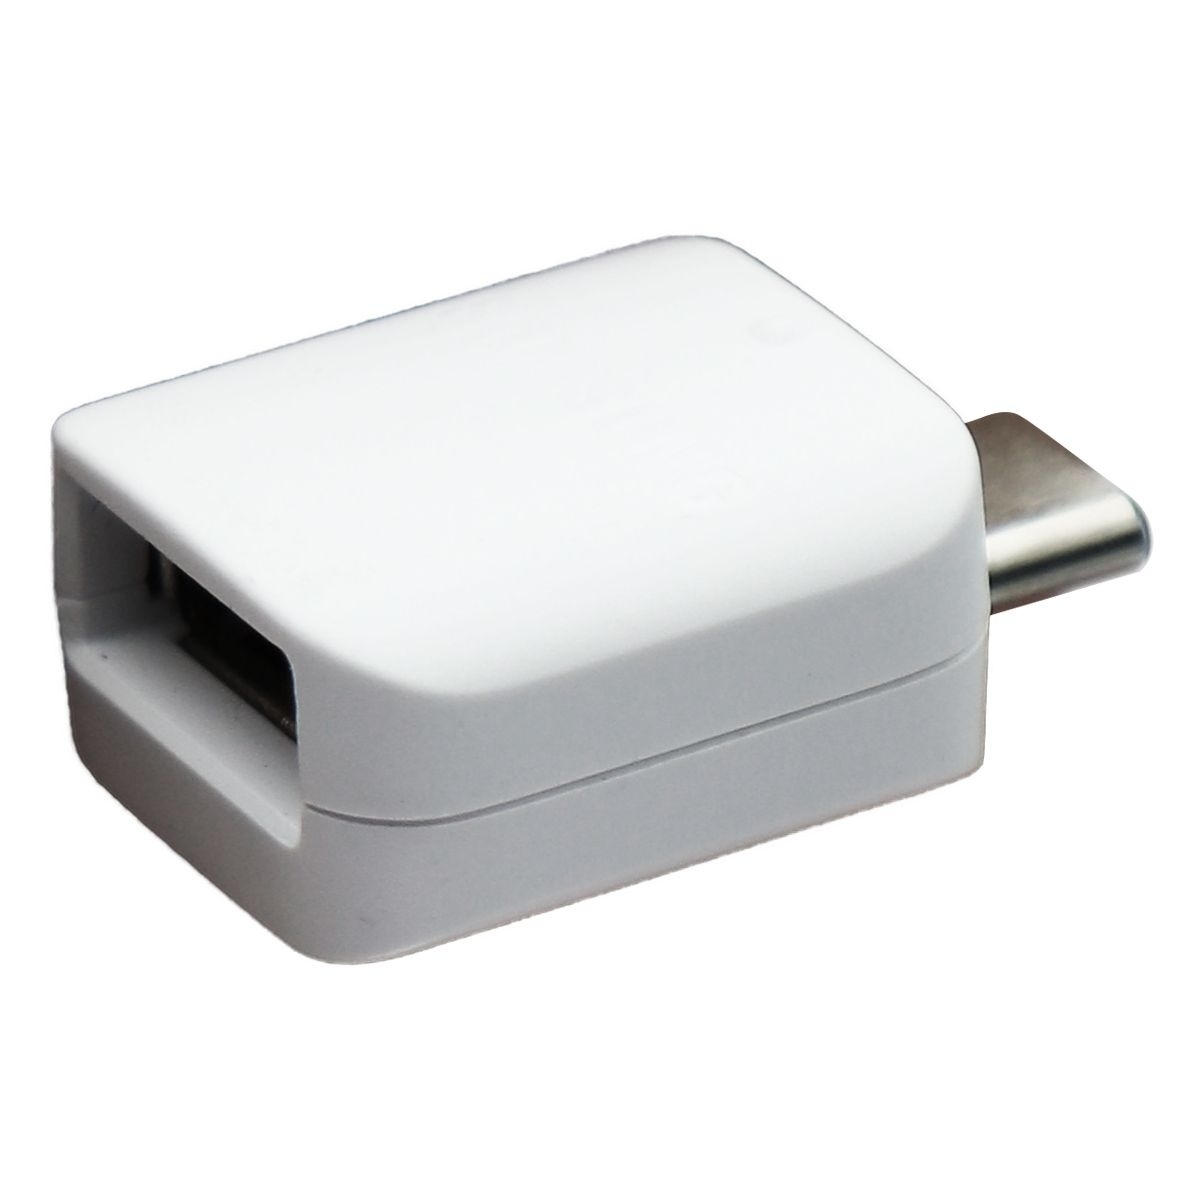 Original Samsung USB-C To USB OTG Adapter - White